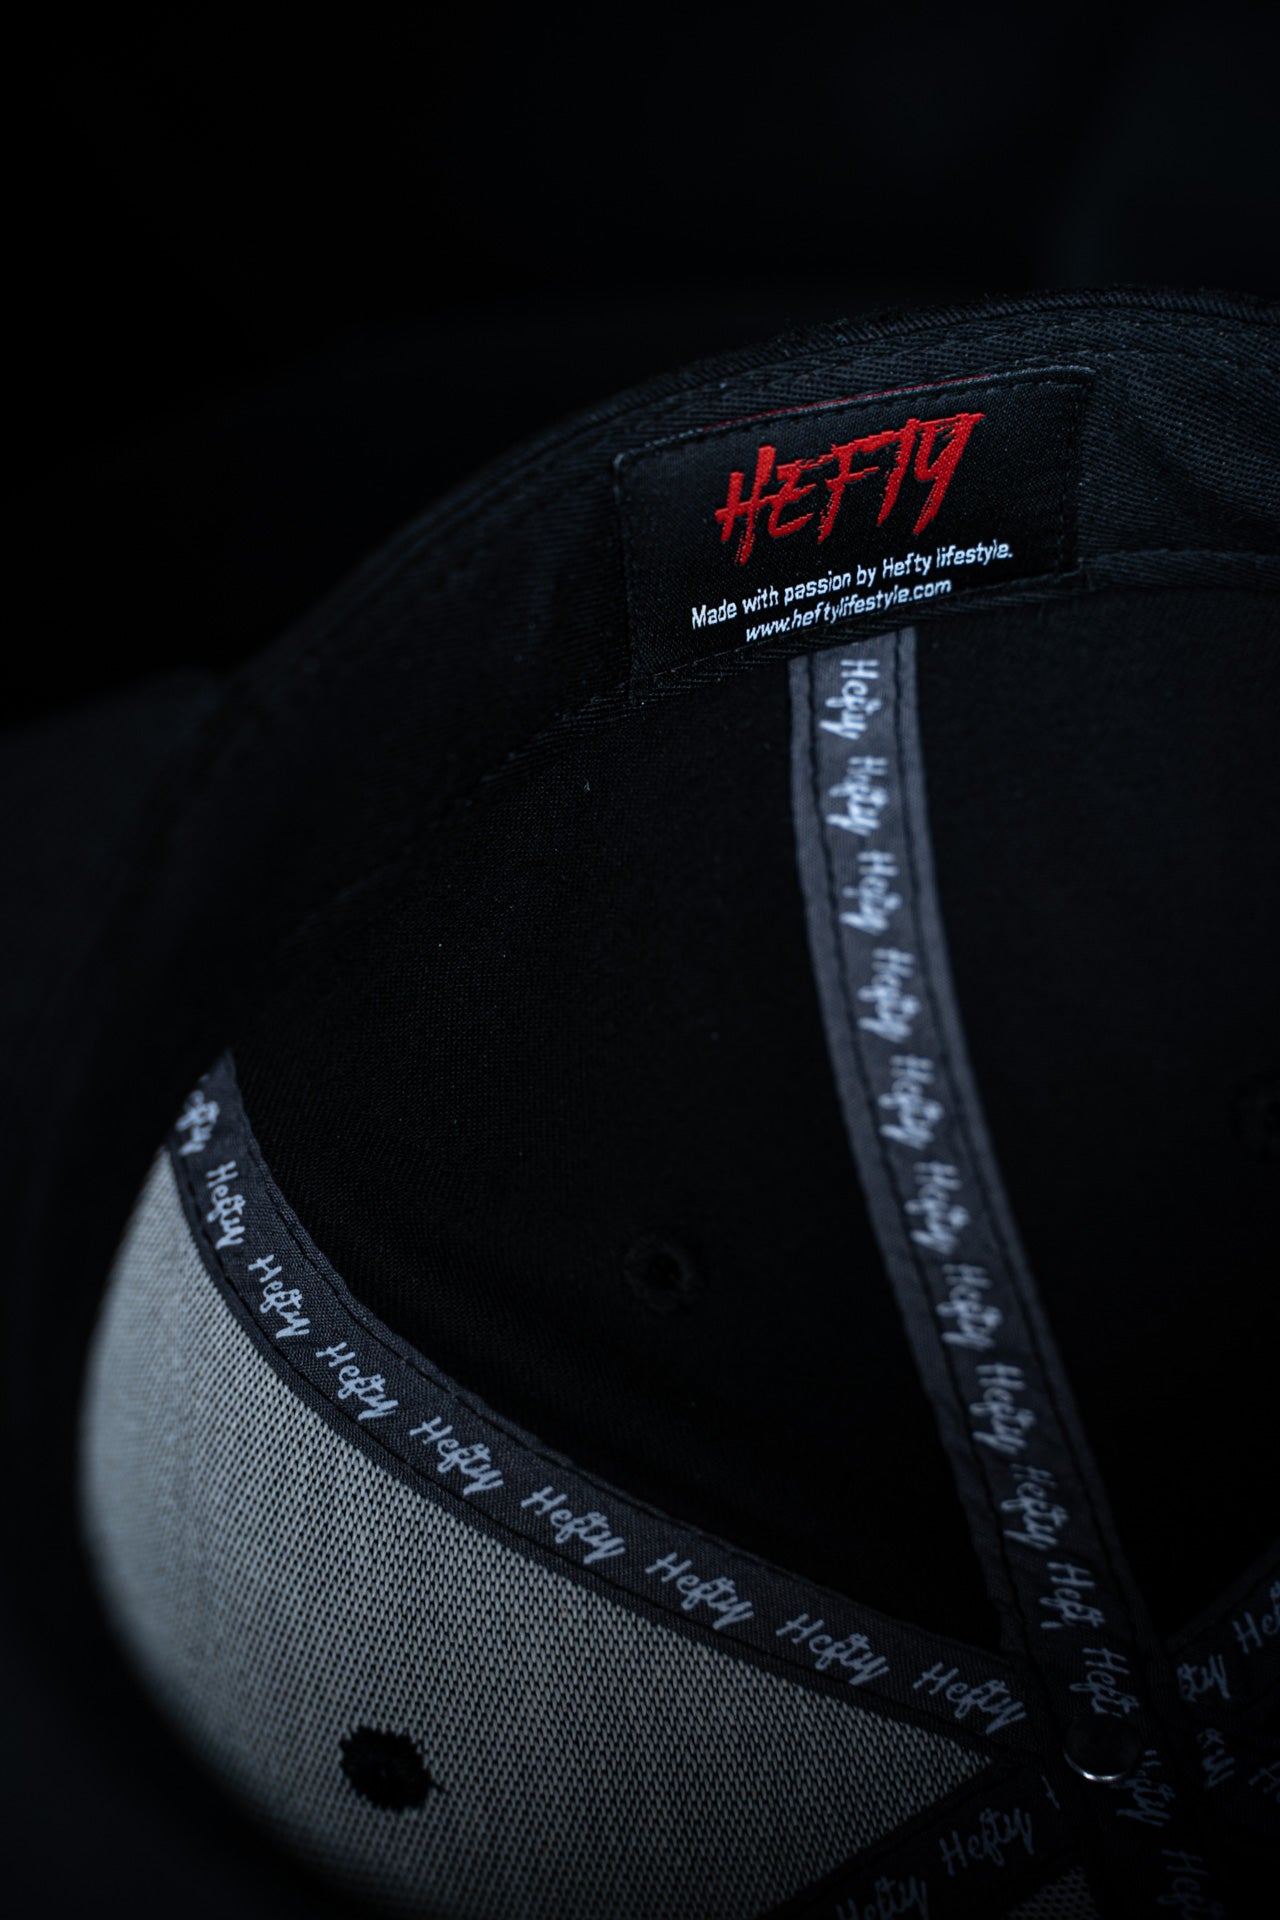 Hefty cap - the H